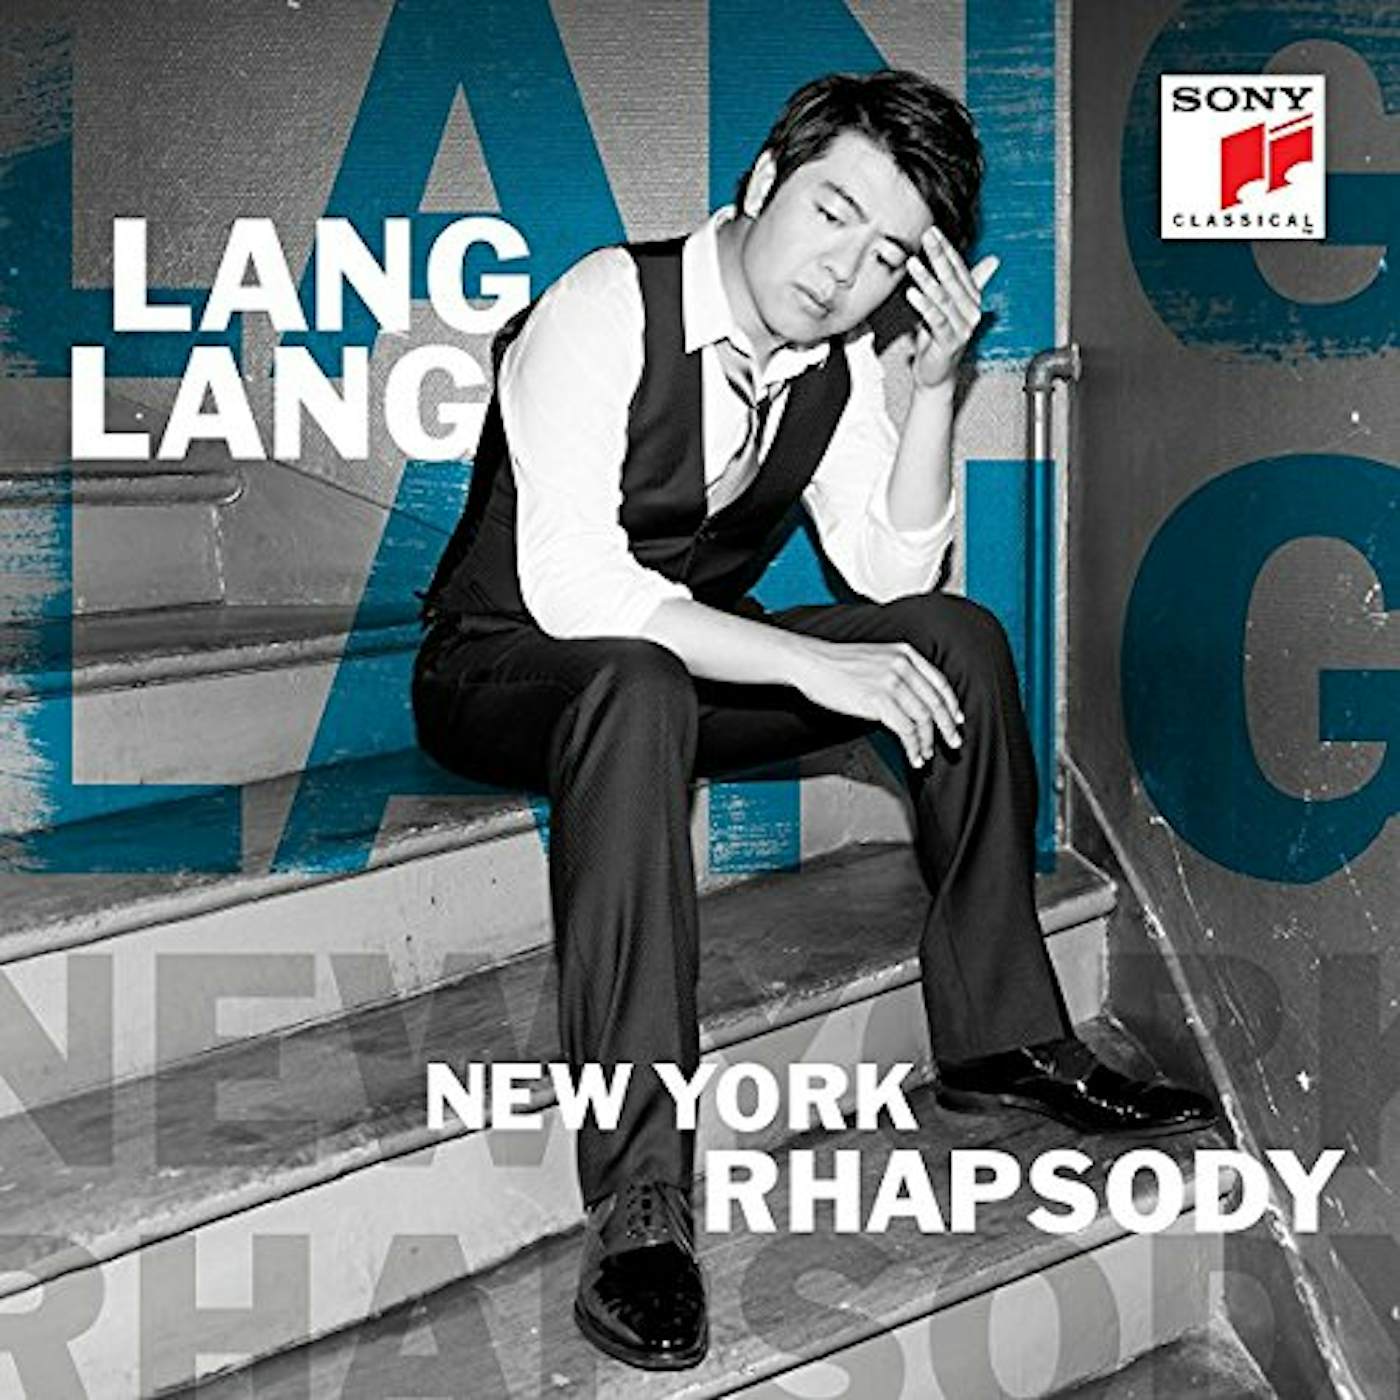 Lang Lang New York Rhapsody Vinyl Record